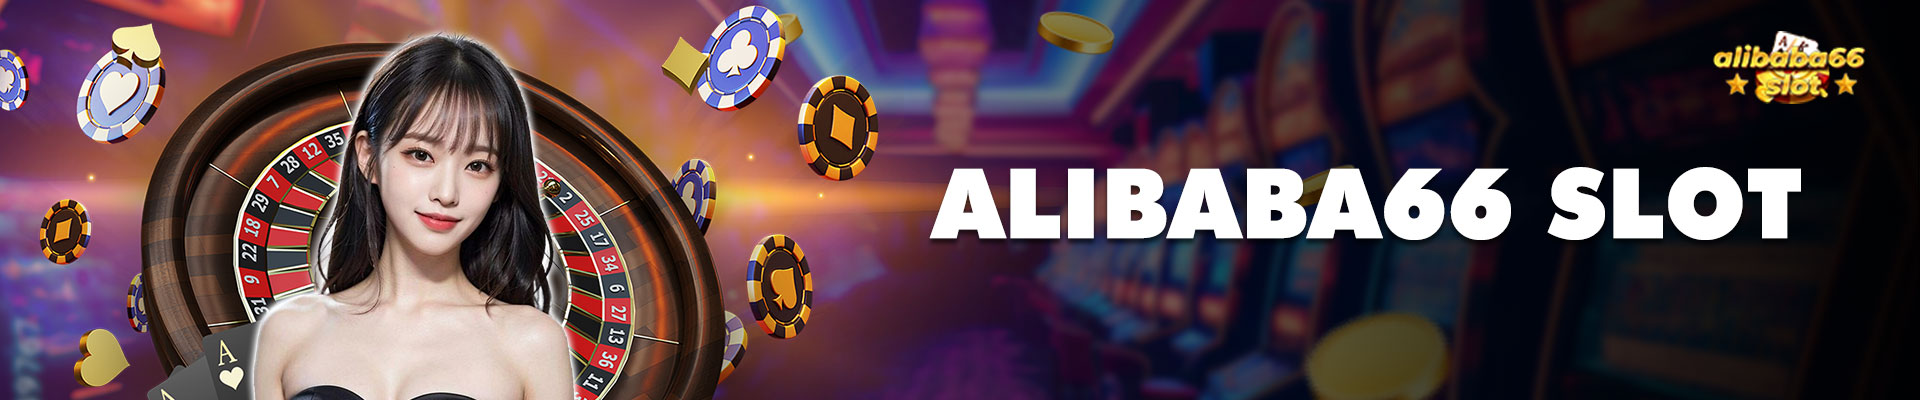 alibaba66 slot